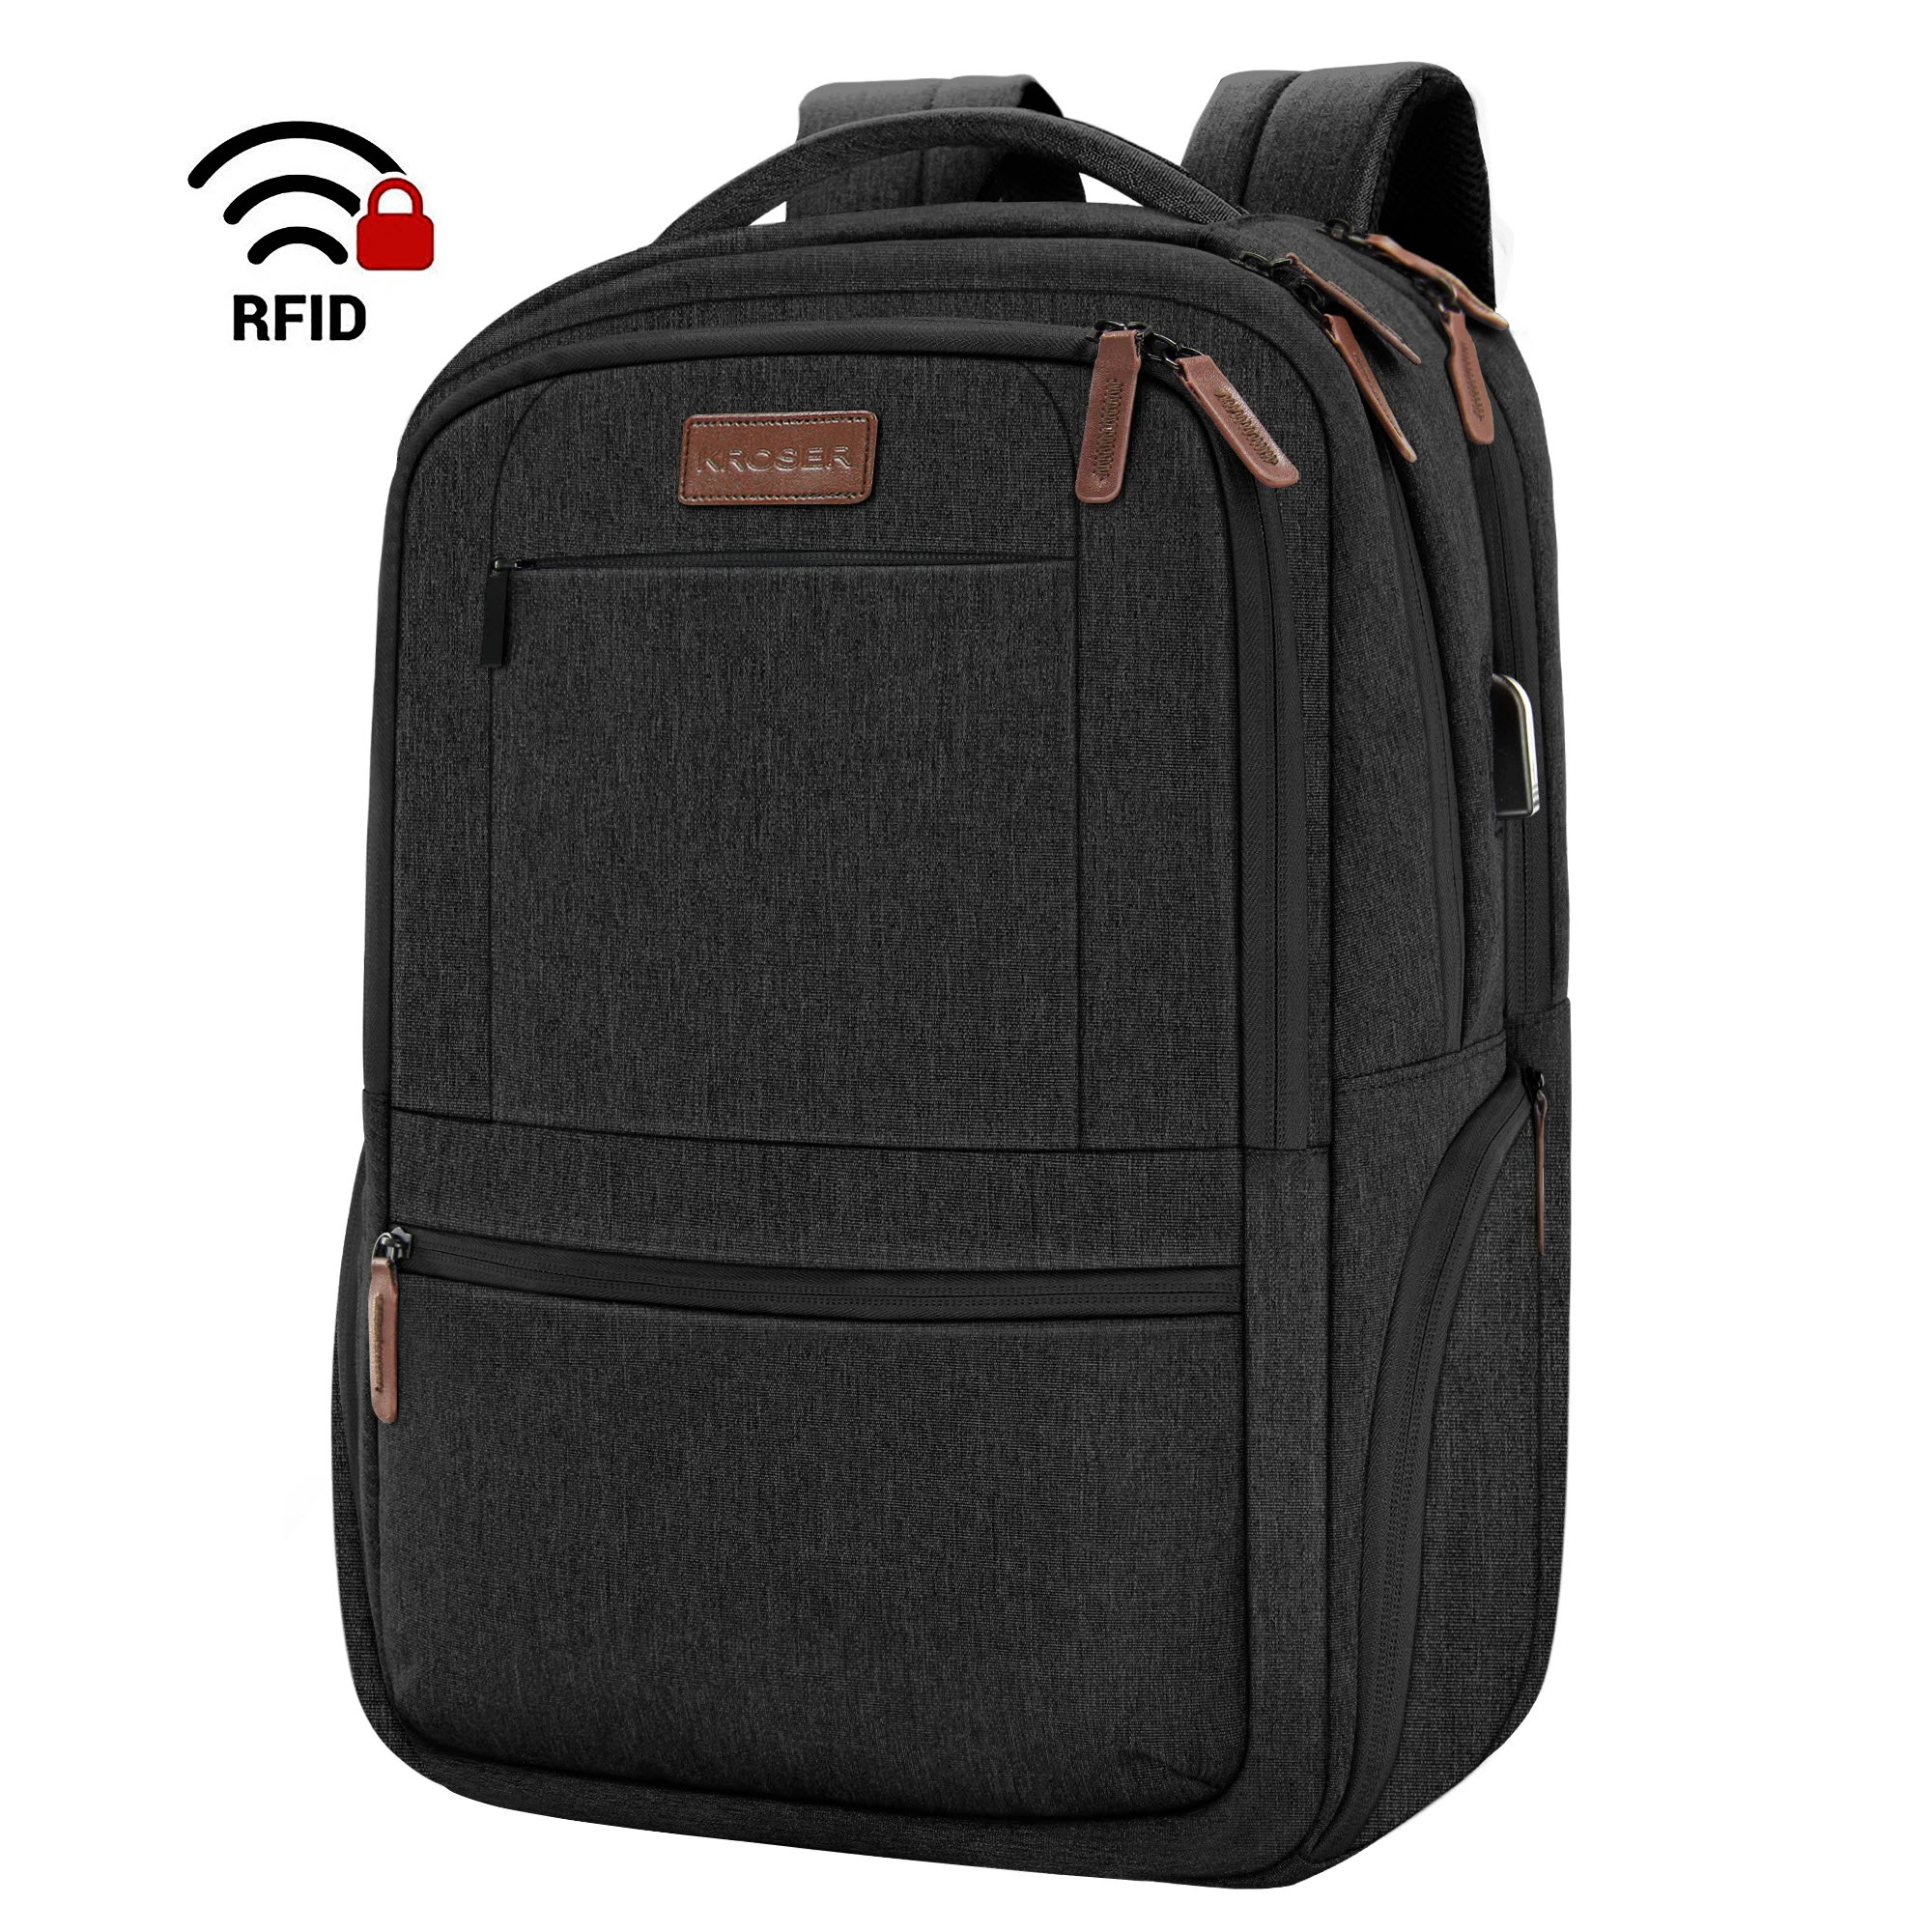 Kroser 15.6 Inch Laptop Backpack FrontView